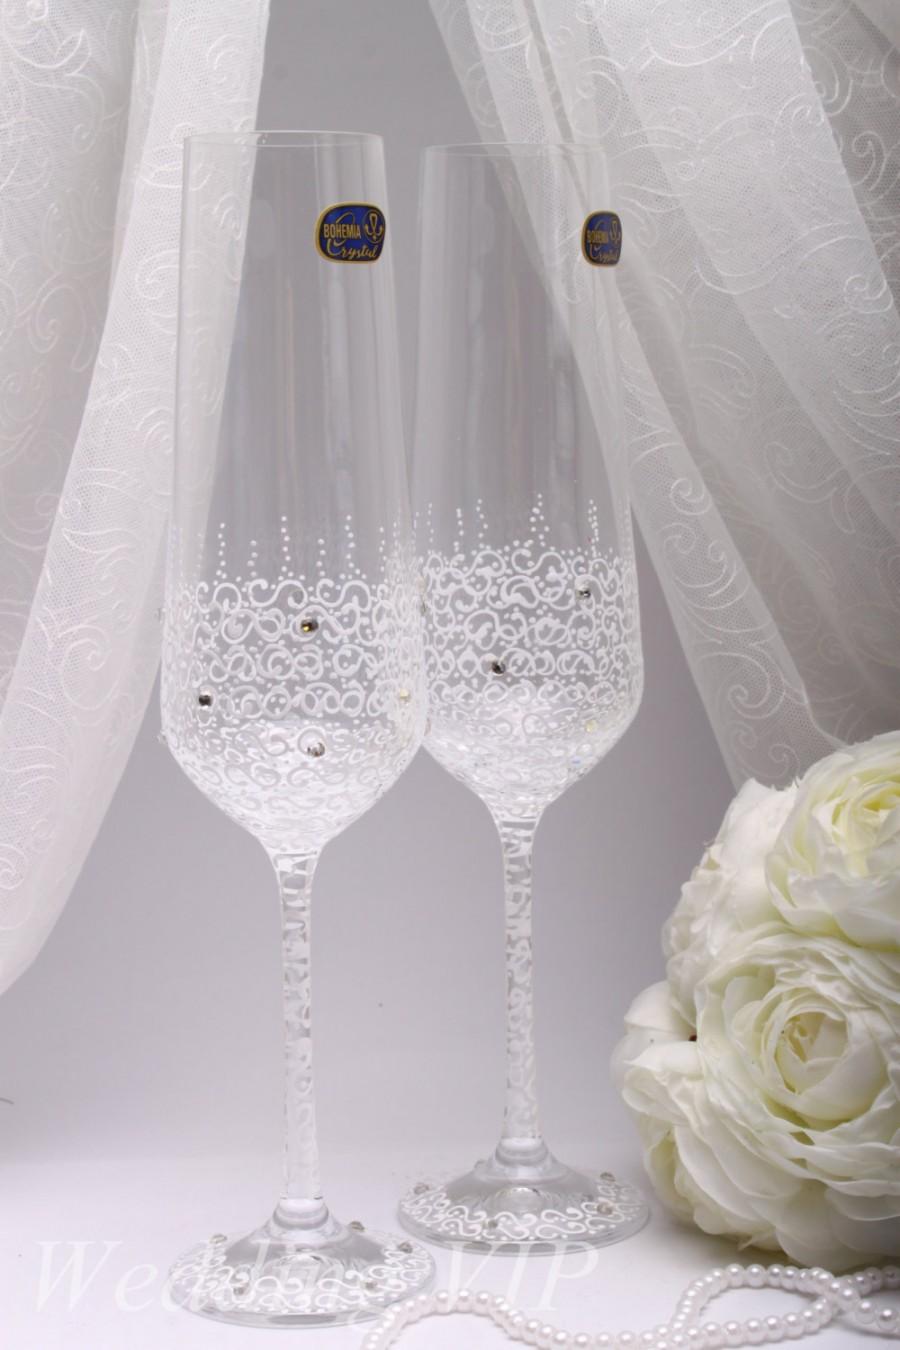 Mariage - Glasses wedding White LACE -HAND Painted- Personalized glasses Wedding Toasting Glasses champagne glasses Champagne Flutes Mr and Mrs glasse